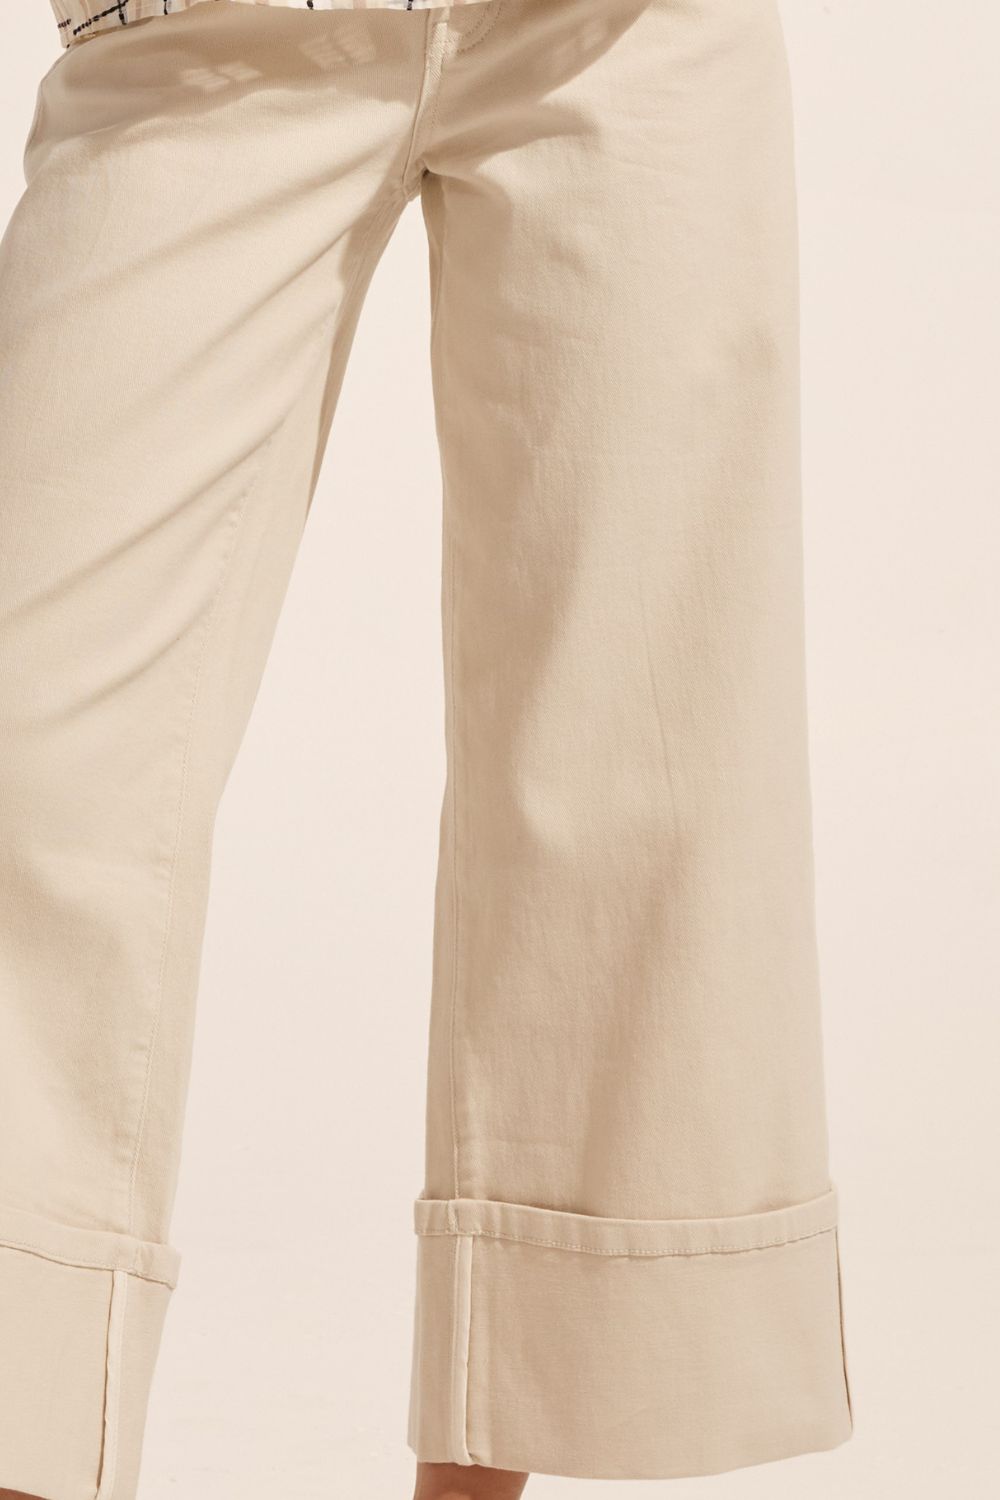 cream, pant, wide leg, deep cuff at hem, denim, high waist, close up image